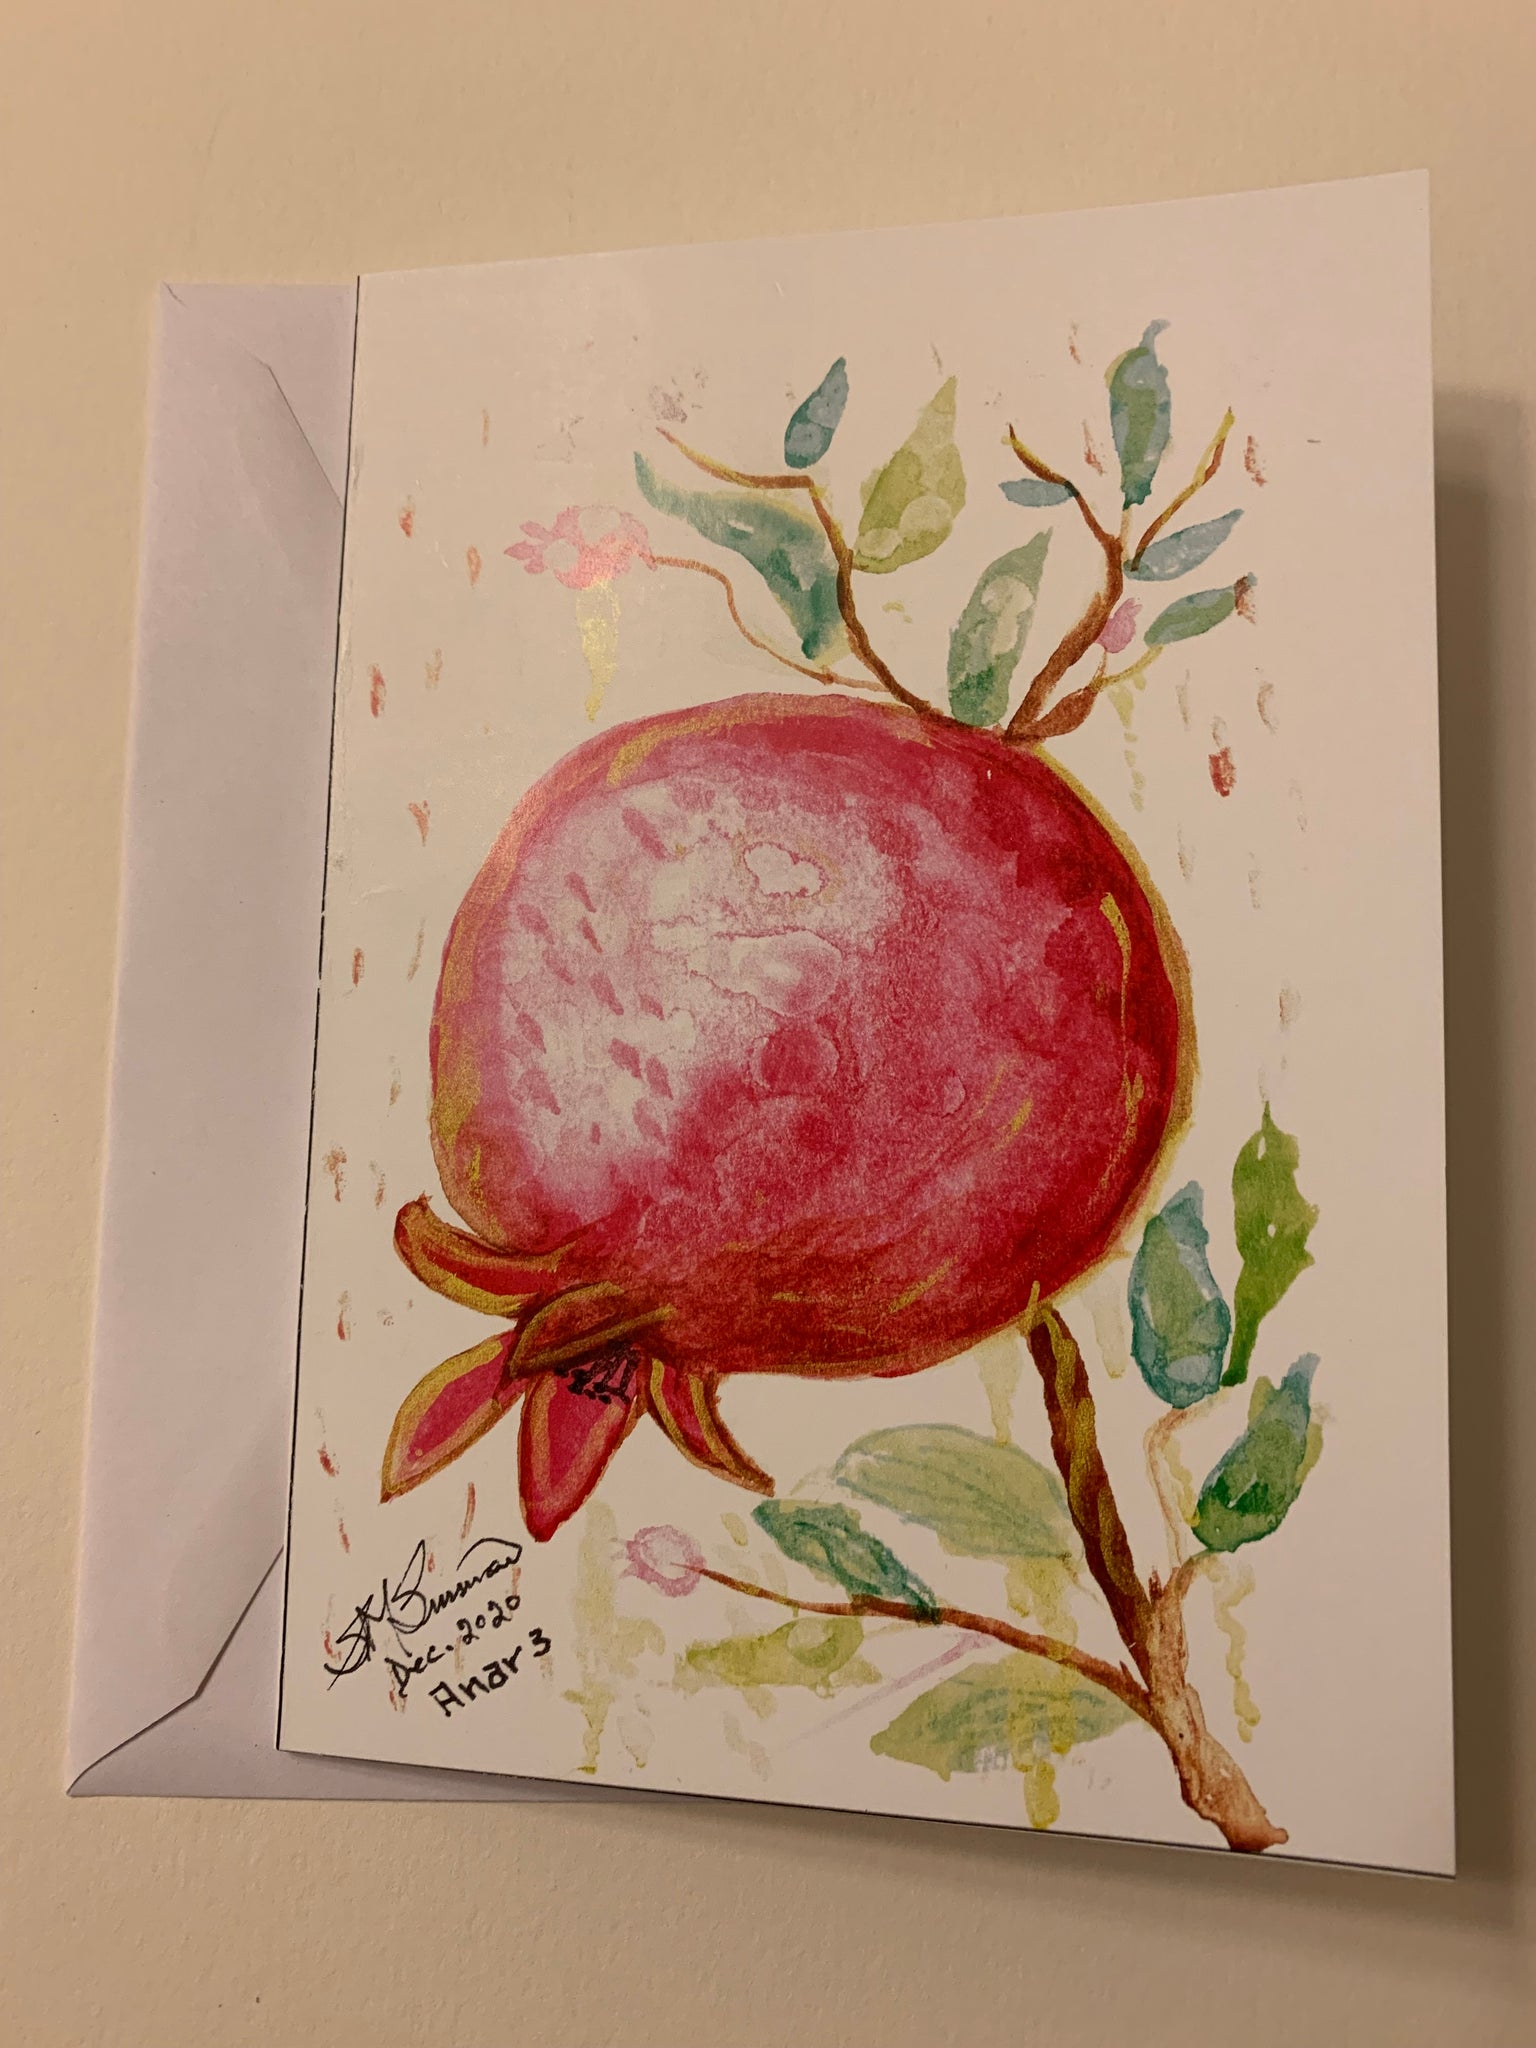 Handmade Holiday Card: “Anar 3 - Pomegranate”